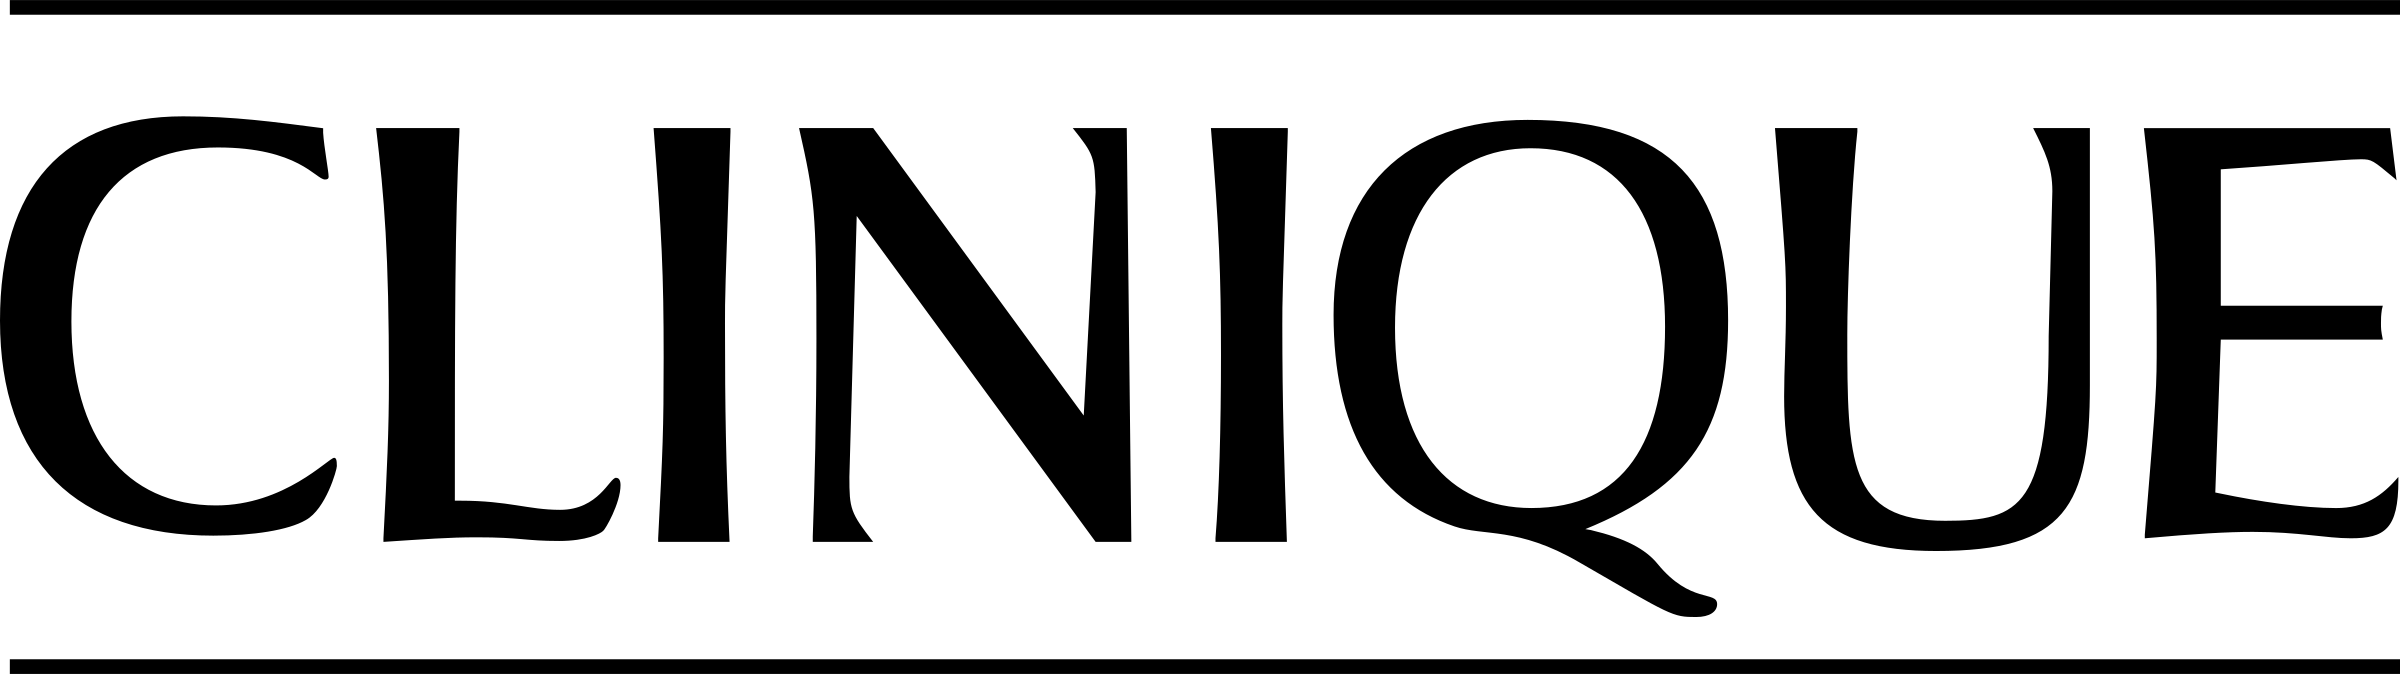 Clinique Logo - Clinique Logo PNG Transparent & SVG Vector